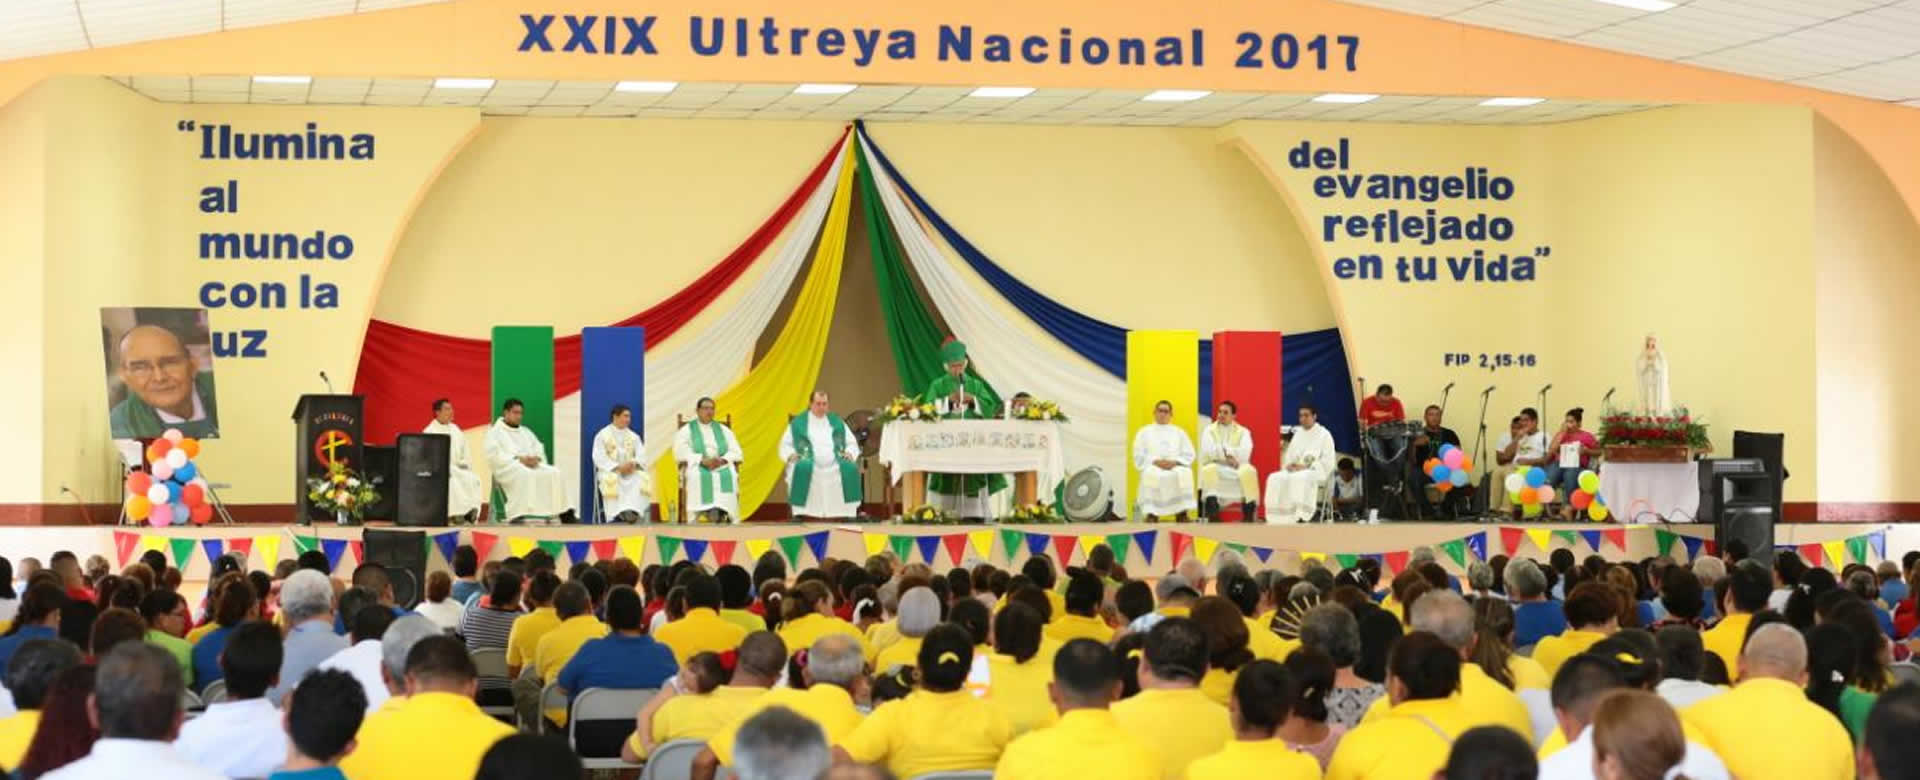 https://www.vivanicaragua.com.ni/2017/10/22/variedades/cardenal-brenes-presidio-eucaristia-en-el-xxix-encuentro-nacional-ultreya-2017/